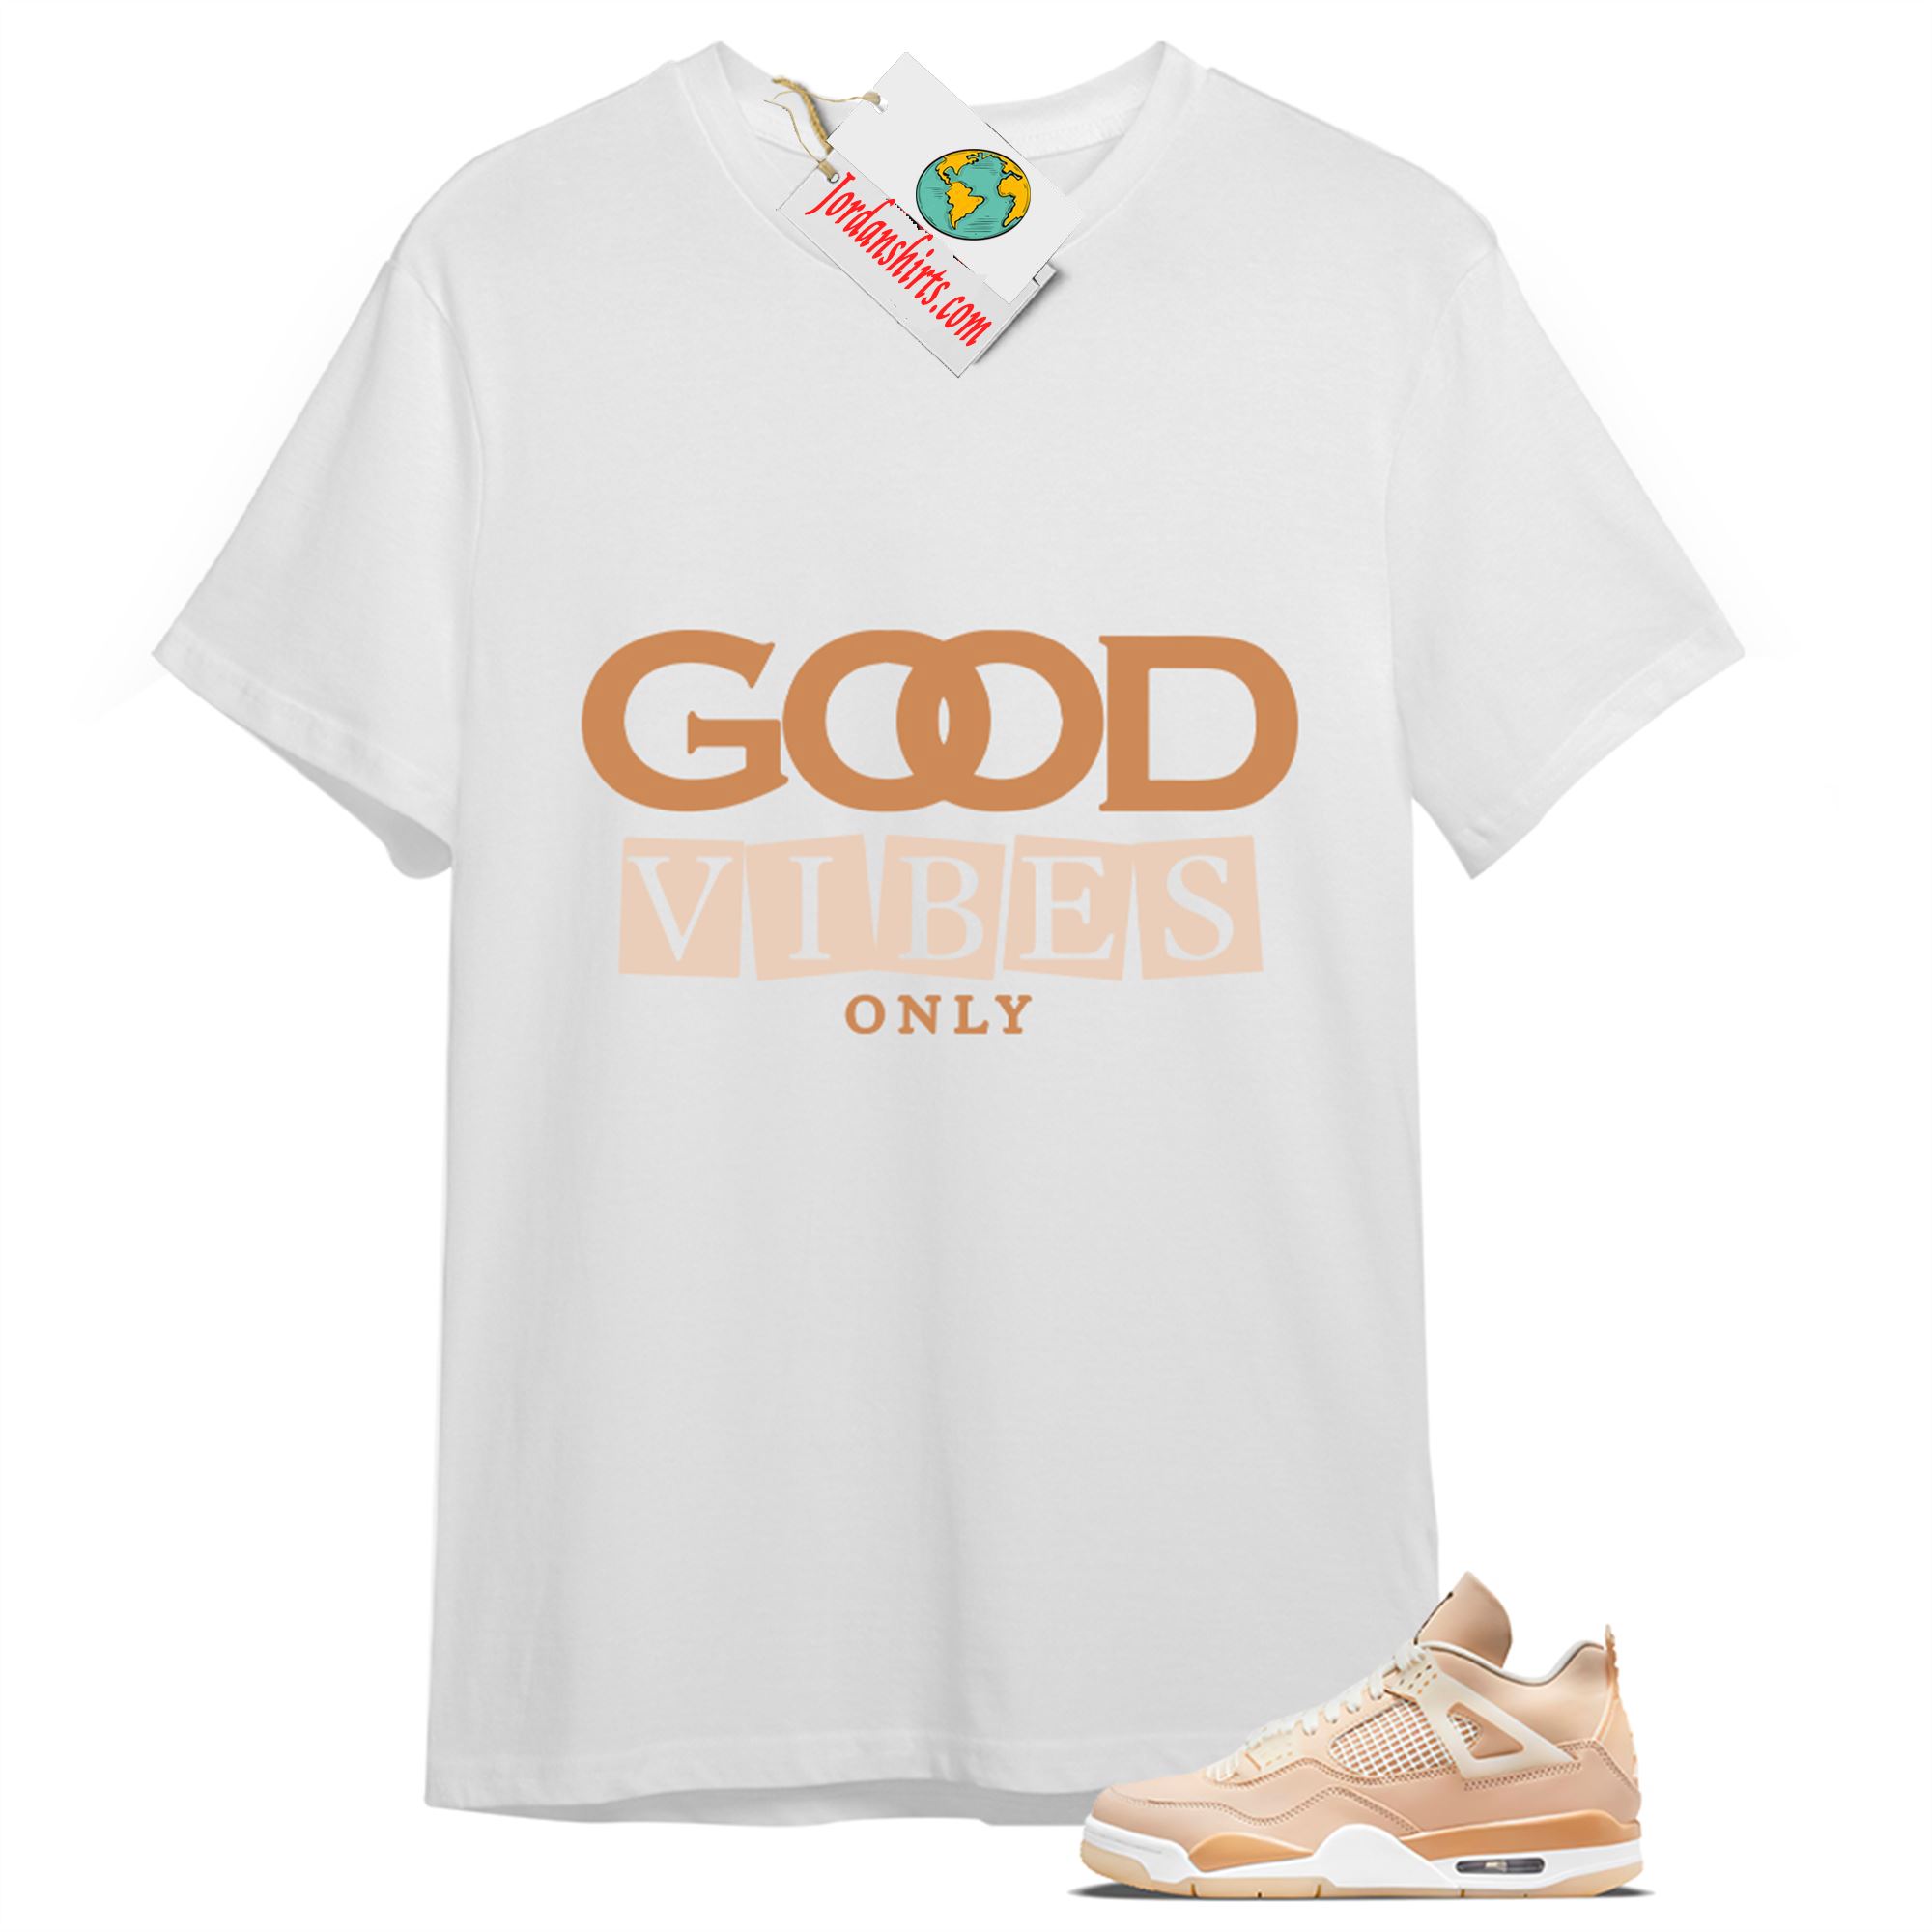 Jordan 4 Shirt, Good Vibes Only White T-shirt Air Jordan 4 Shimmer 4s Plus Size Up To 5xl